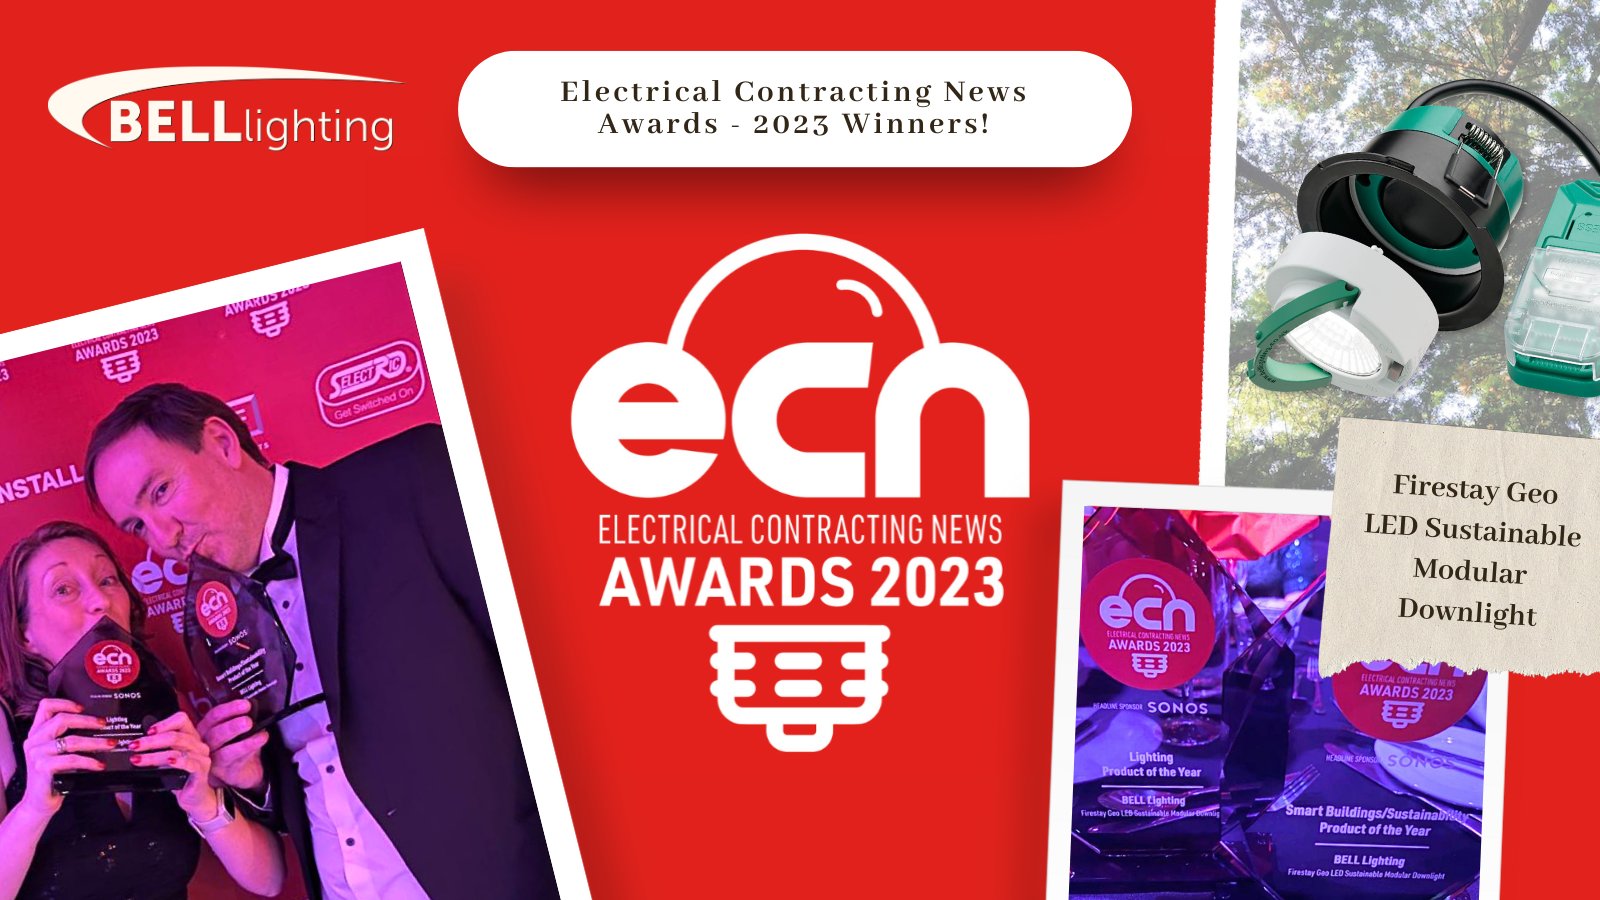 Bell won two awards at the 2023 ECN Awards